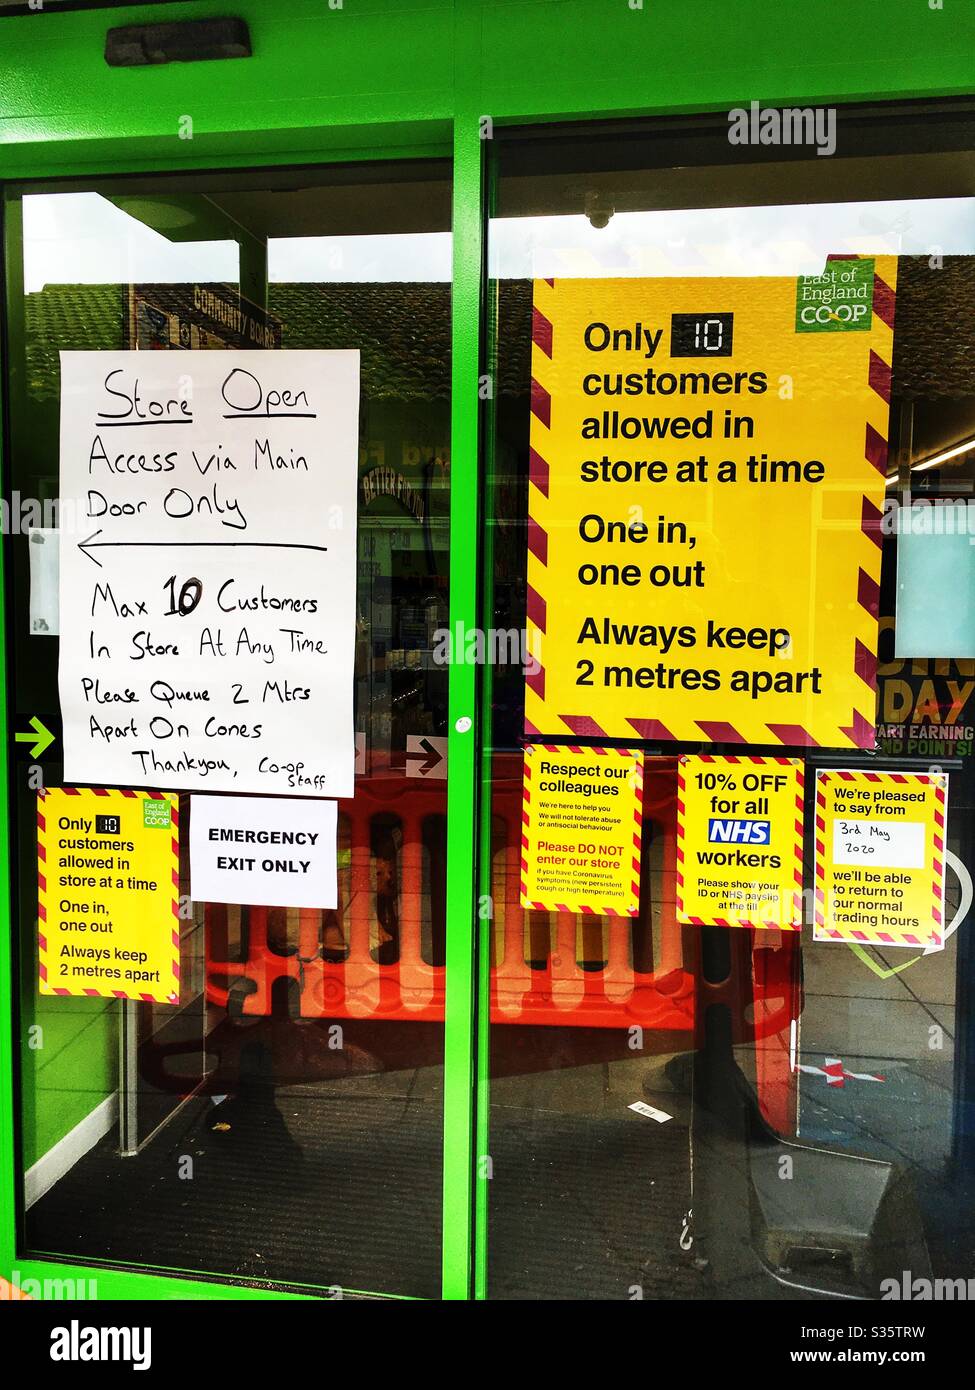 East of England Coop supermarket Coronavirus emergency measures Stock Photo